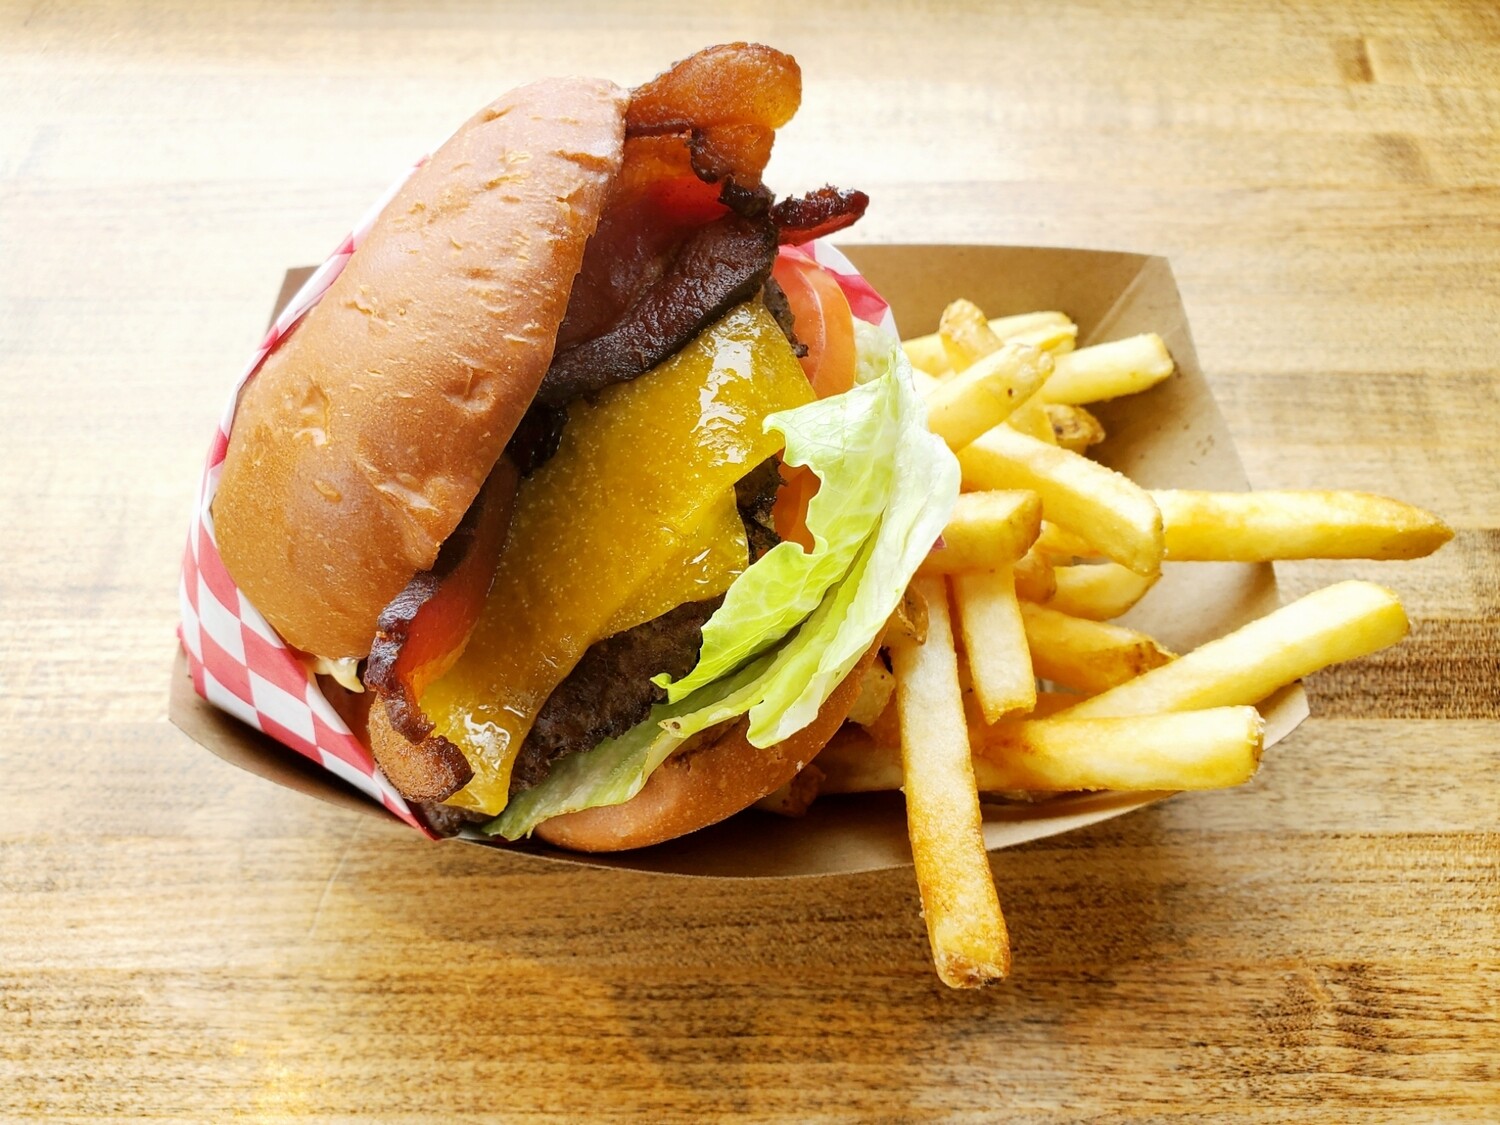 Grubstake Burger - Half Pound Angus Patty